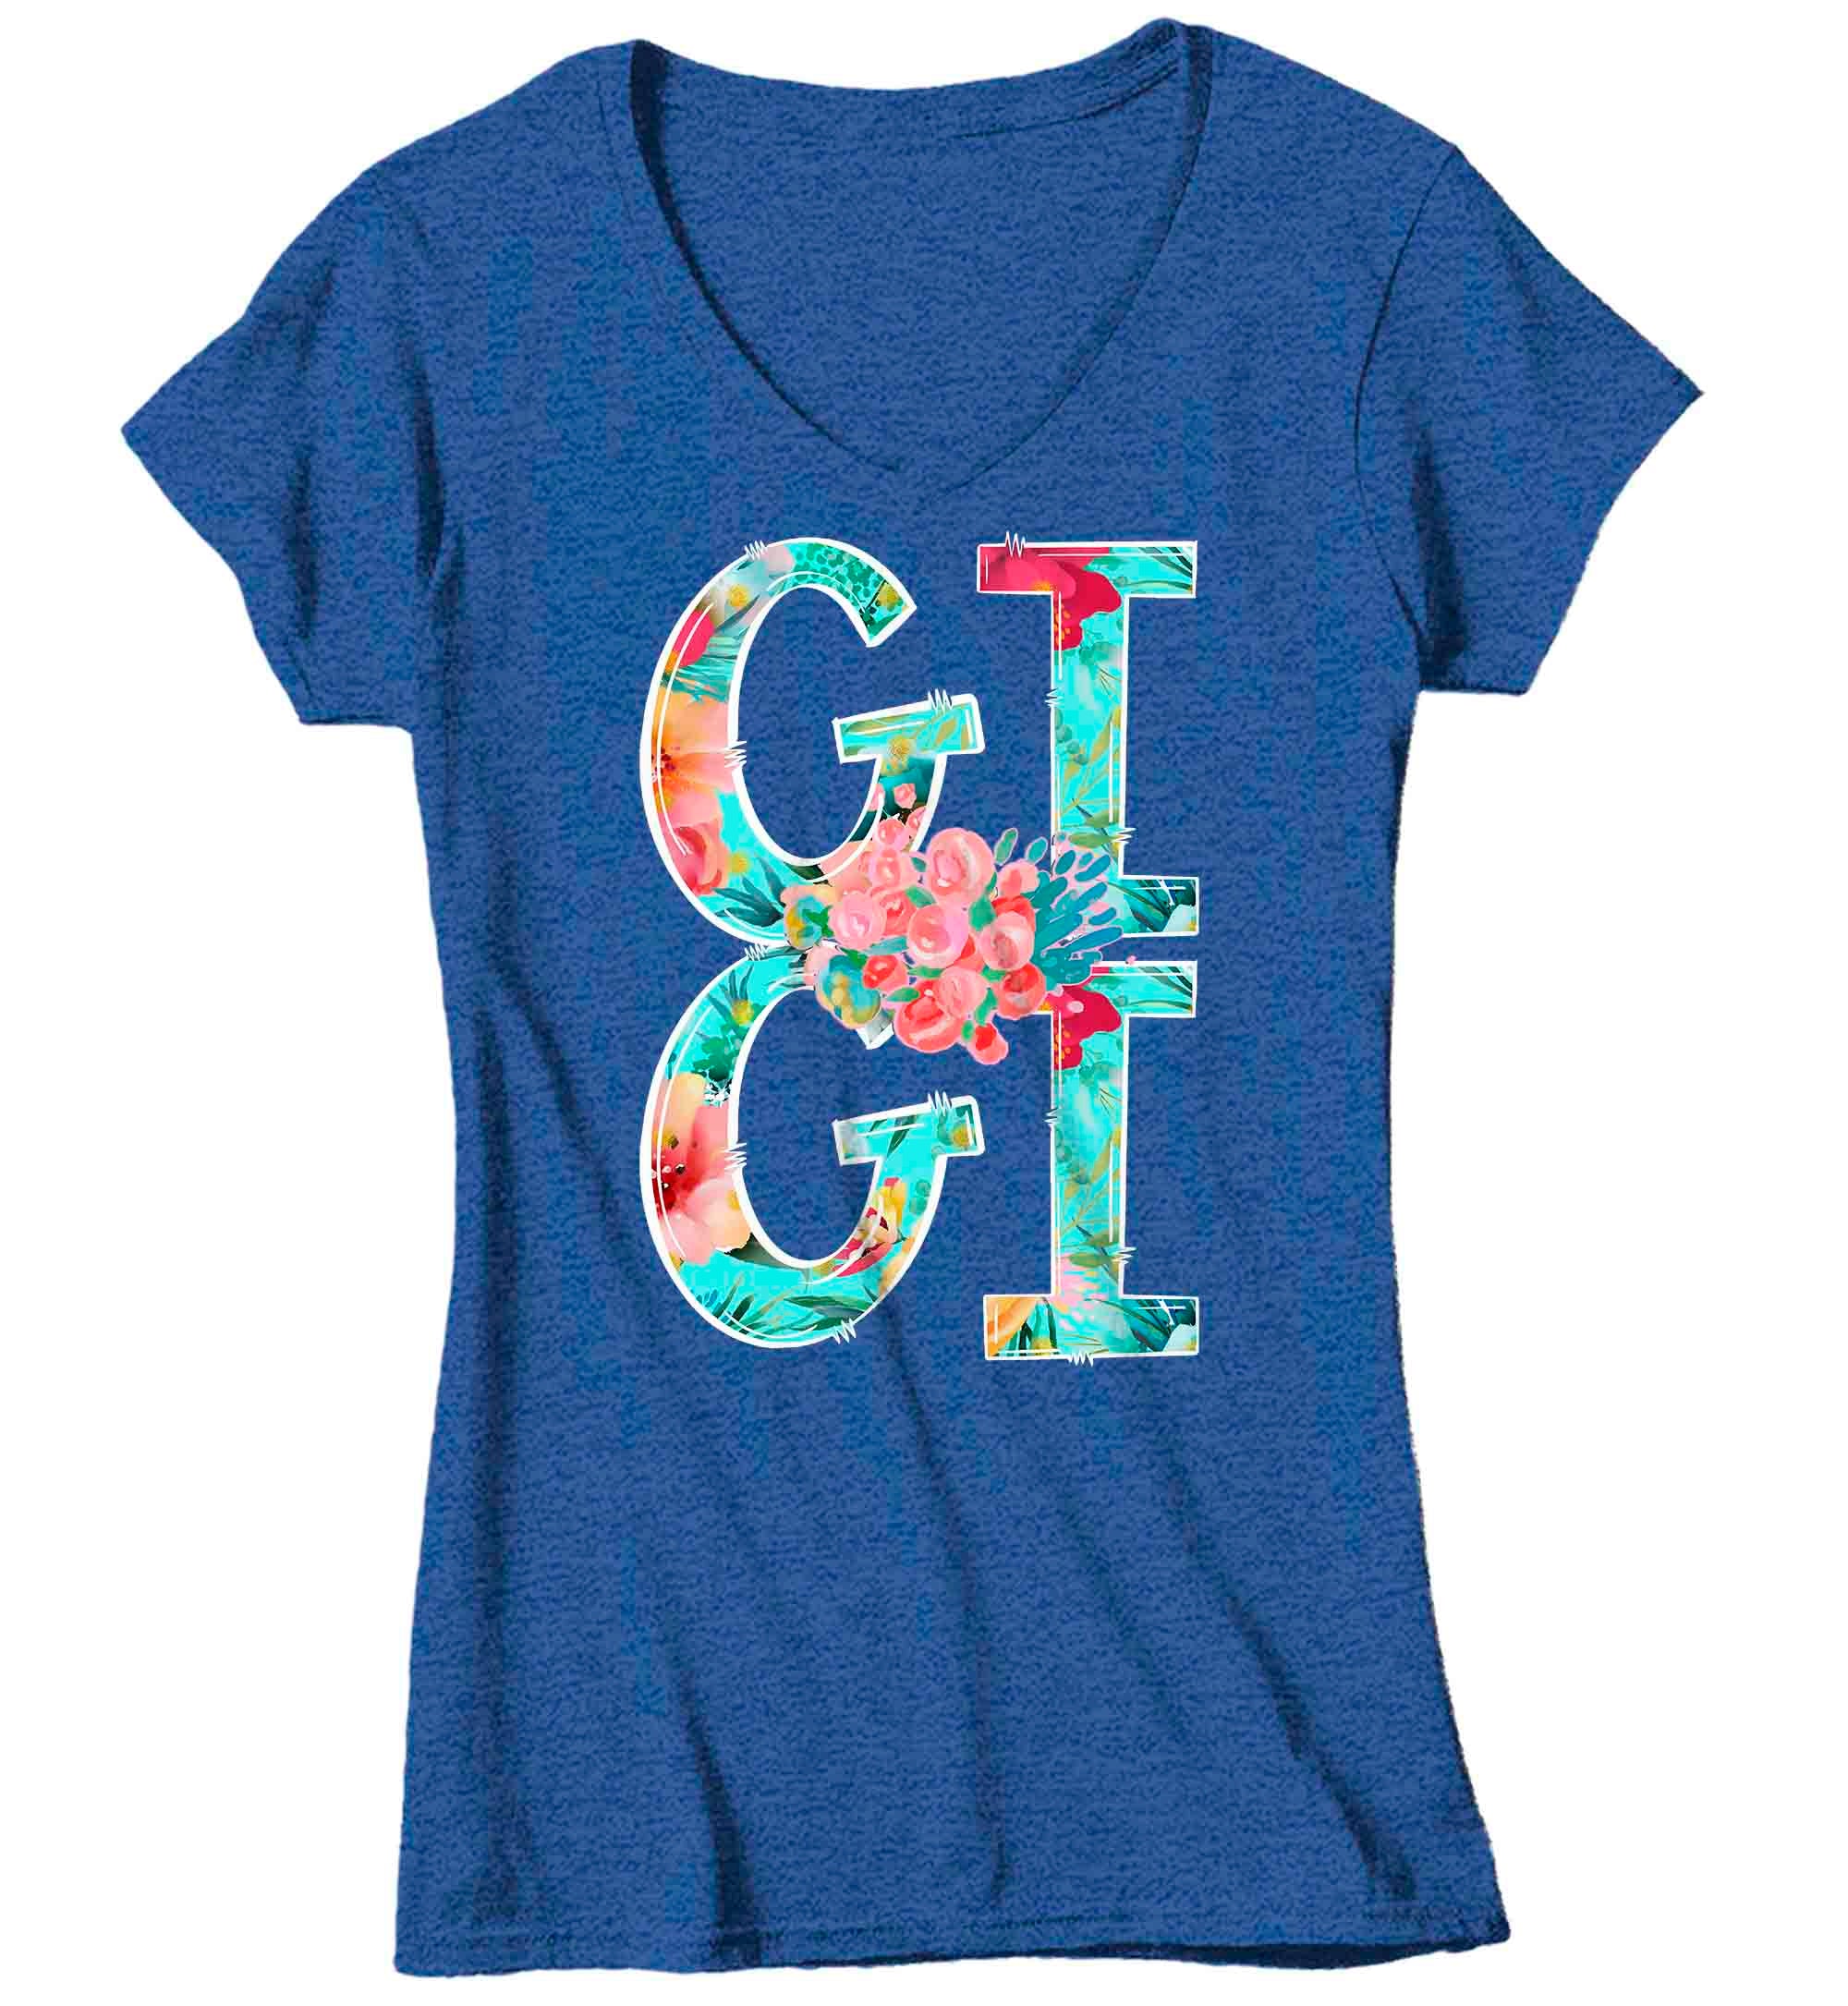 Women's V-Neck Pretty Gigi Shirt Mother's Day Gift Shirt